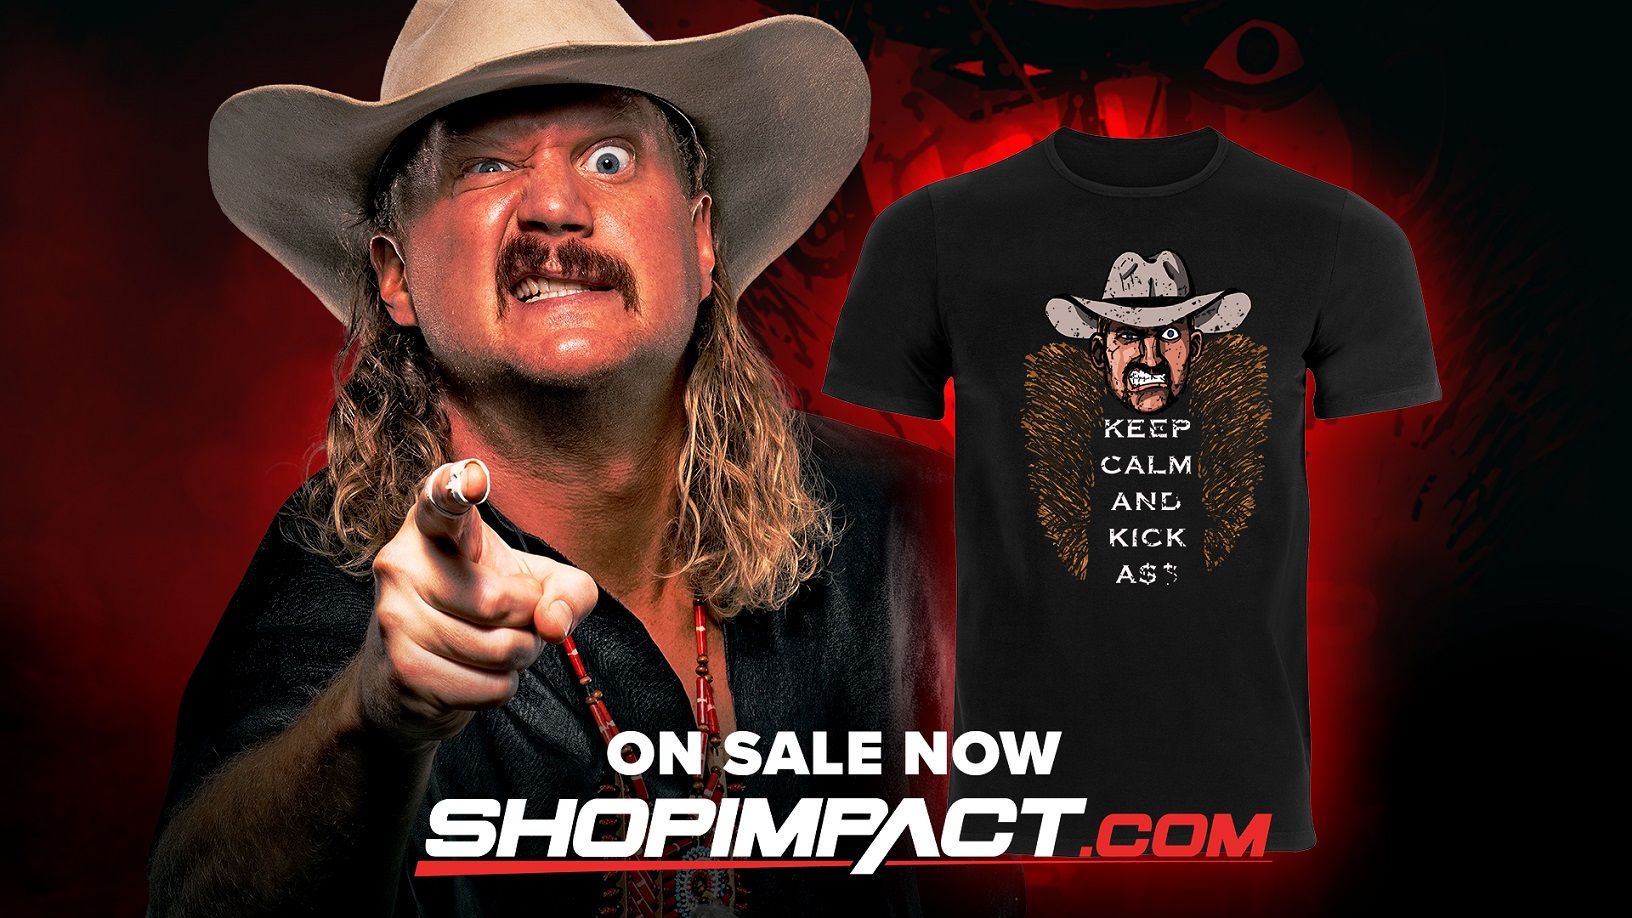 Joe Doering “Keep Calm and Kick Ass” T-Shirt Available Now on ShopIMPACT.com